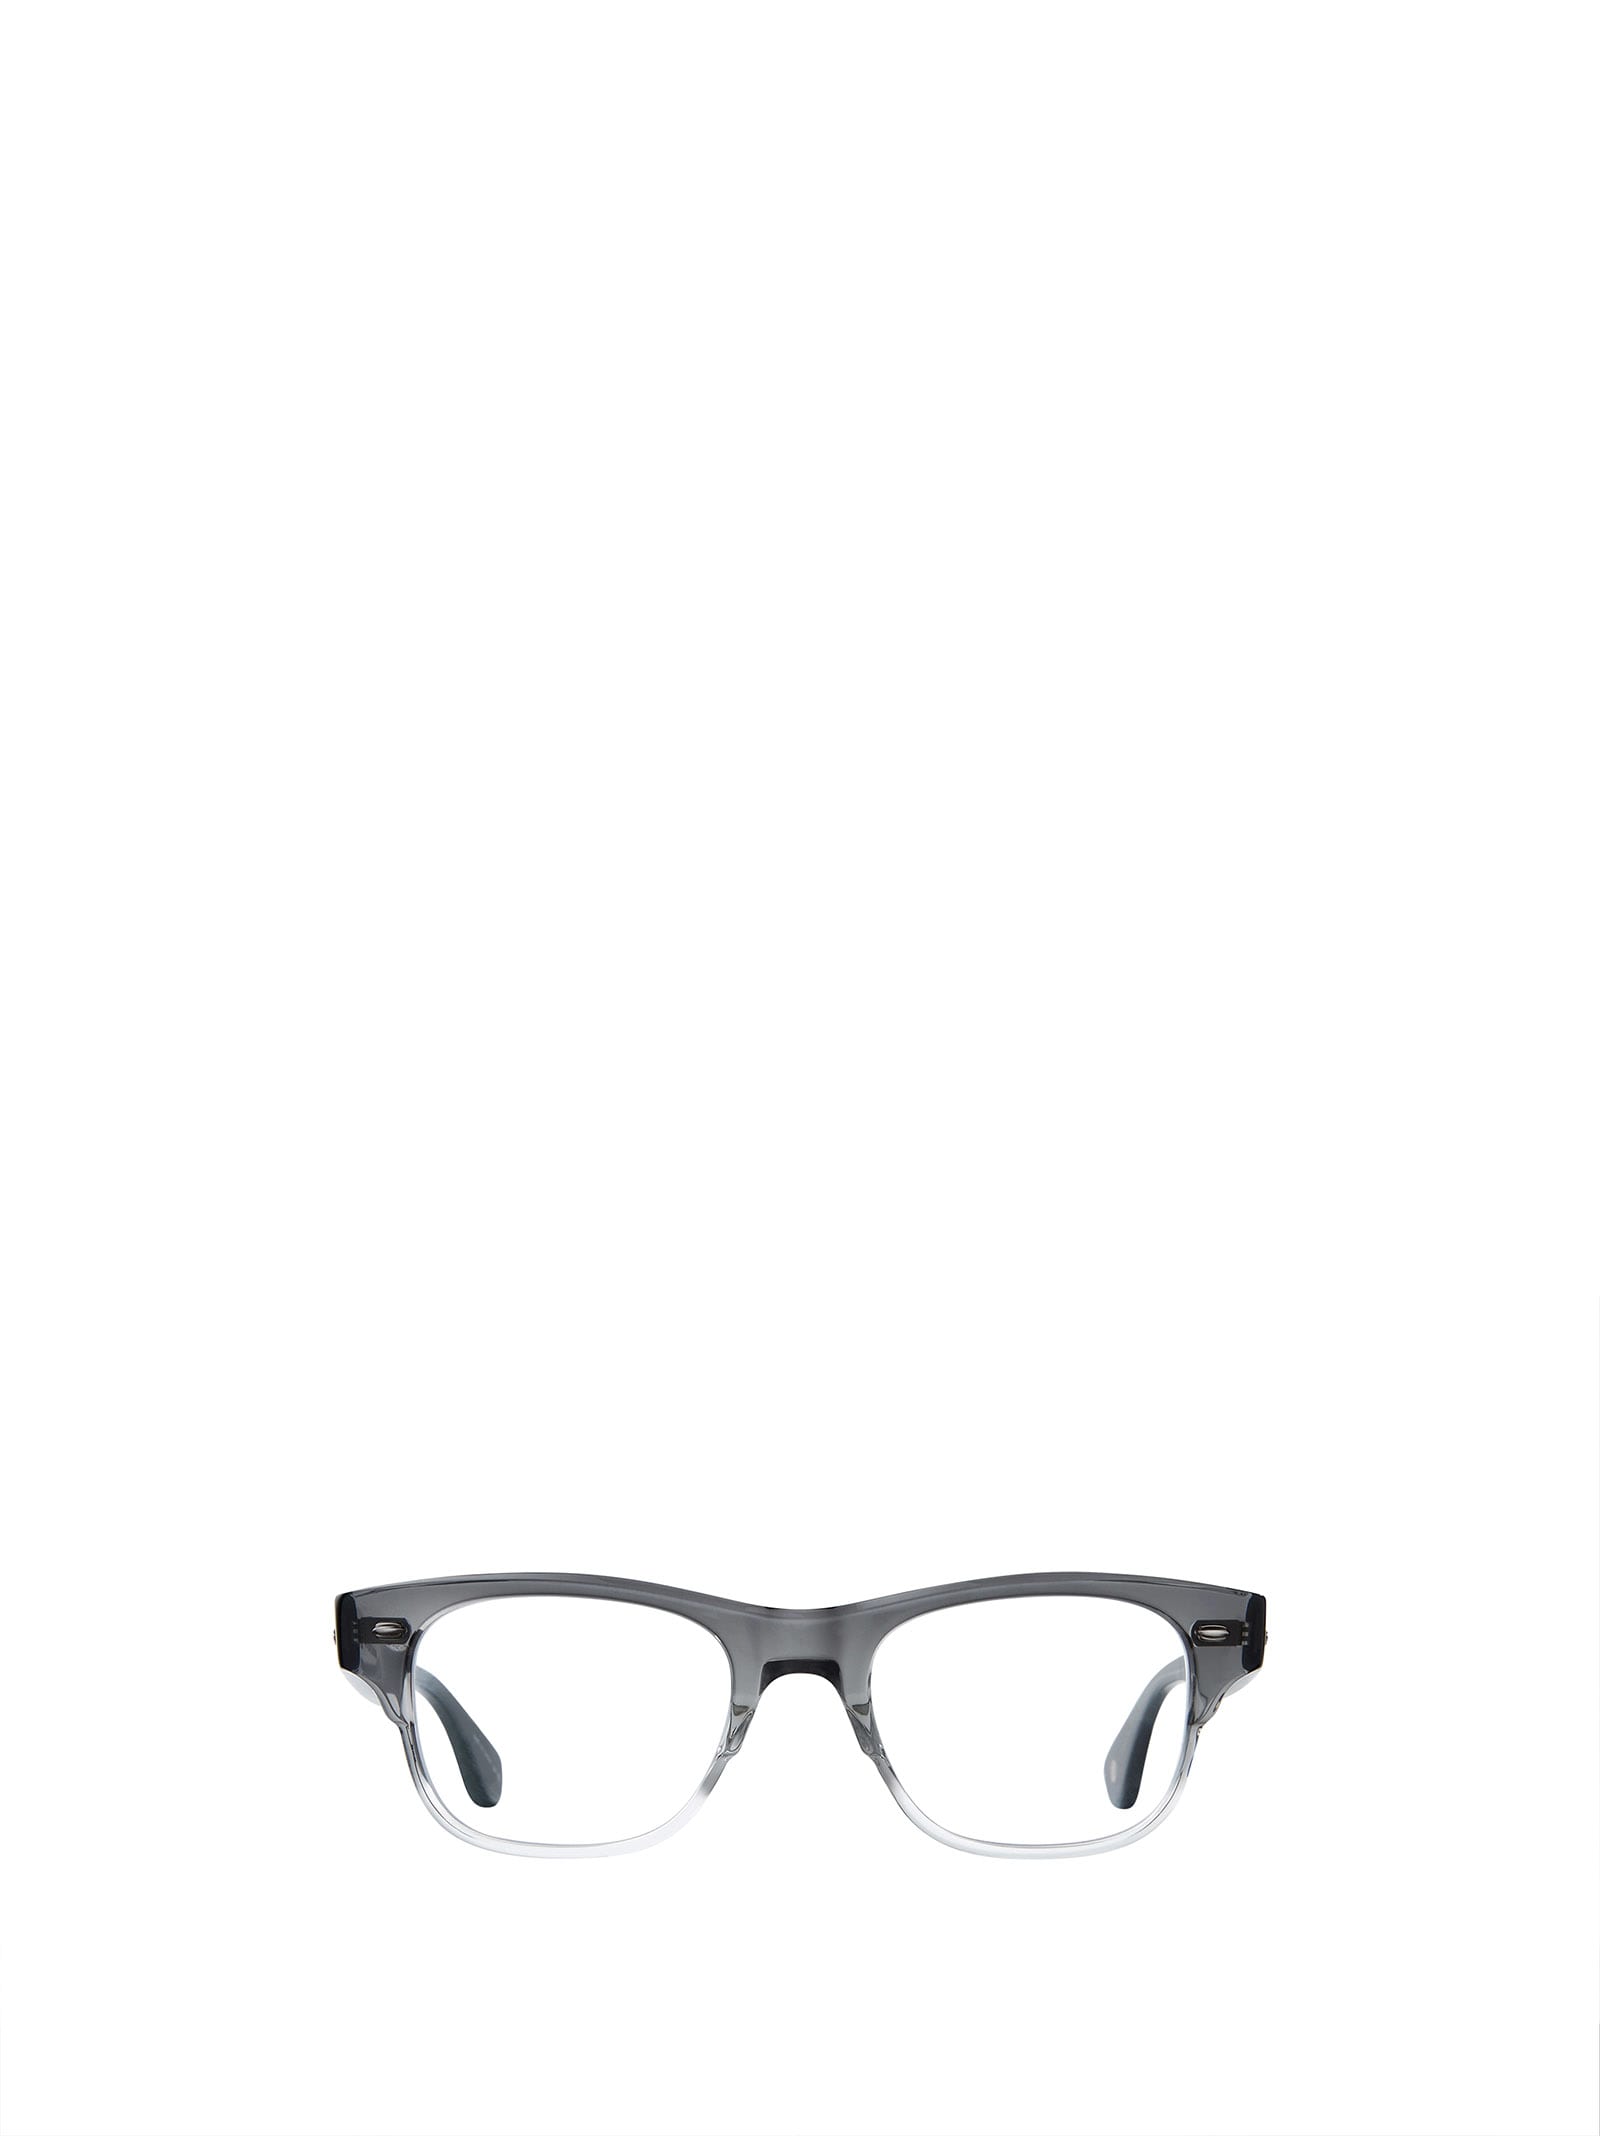 Rodriguez Grey Fade Glasses